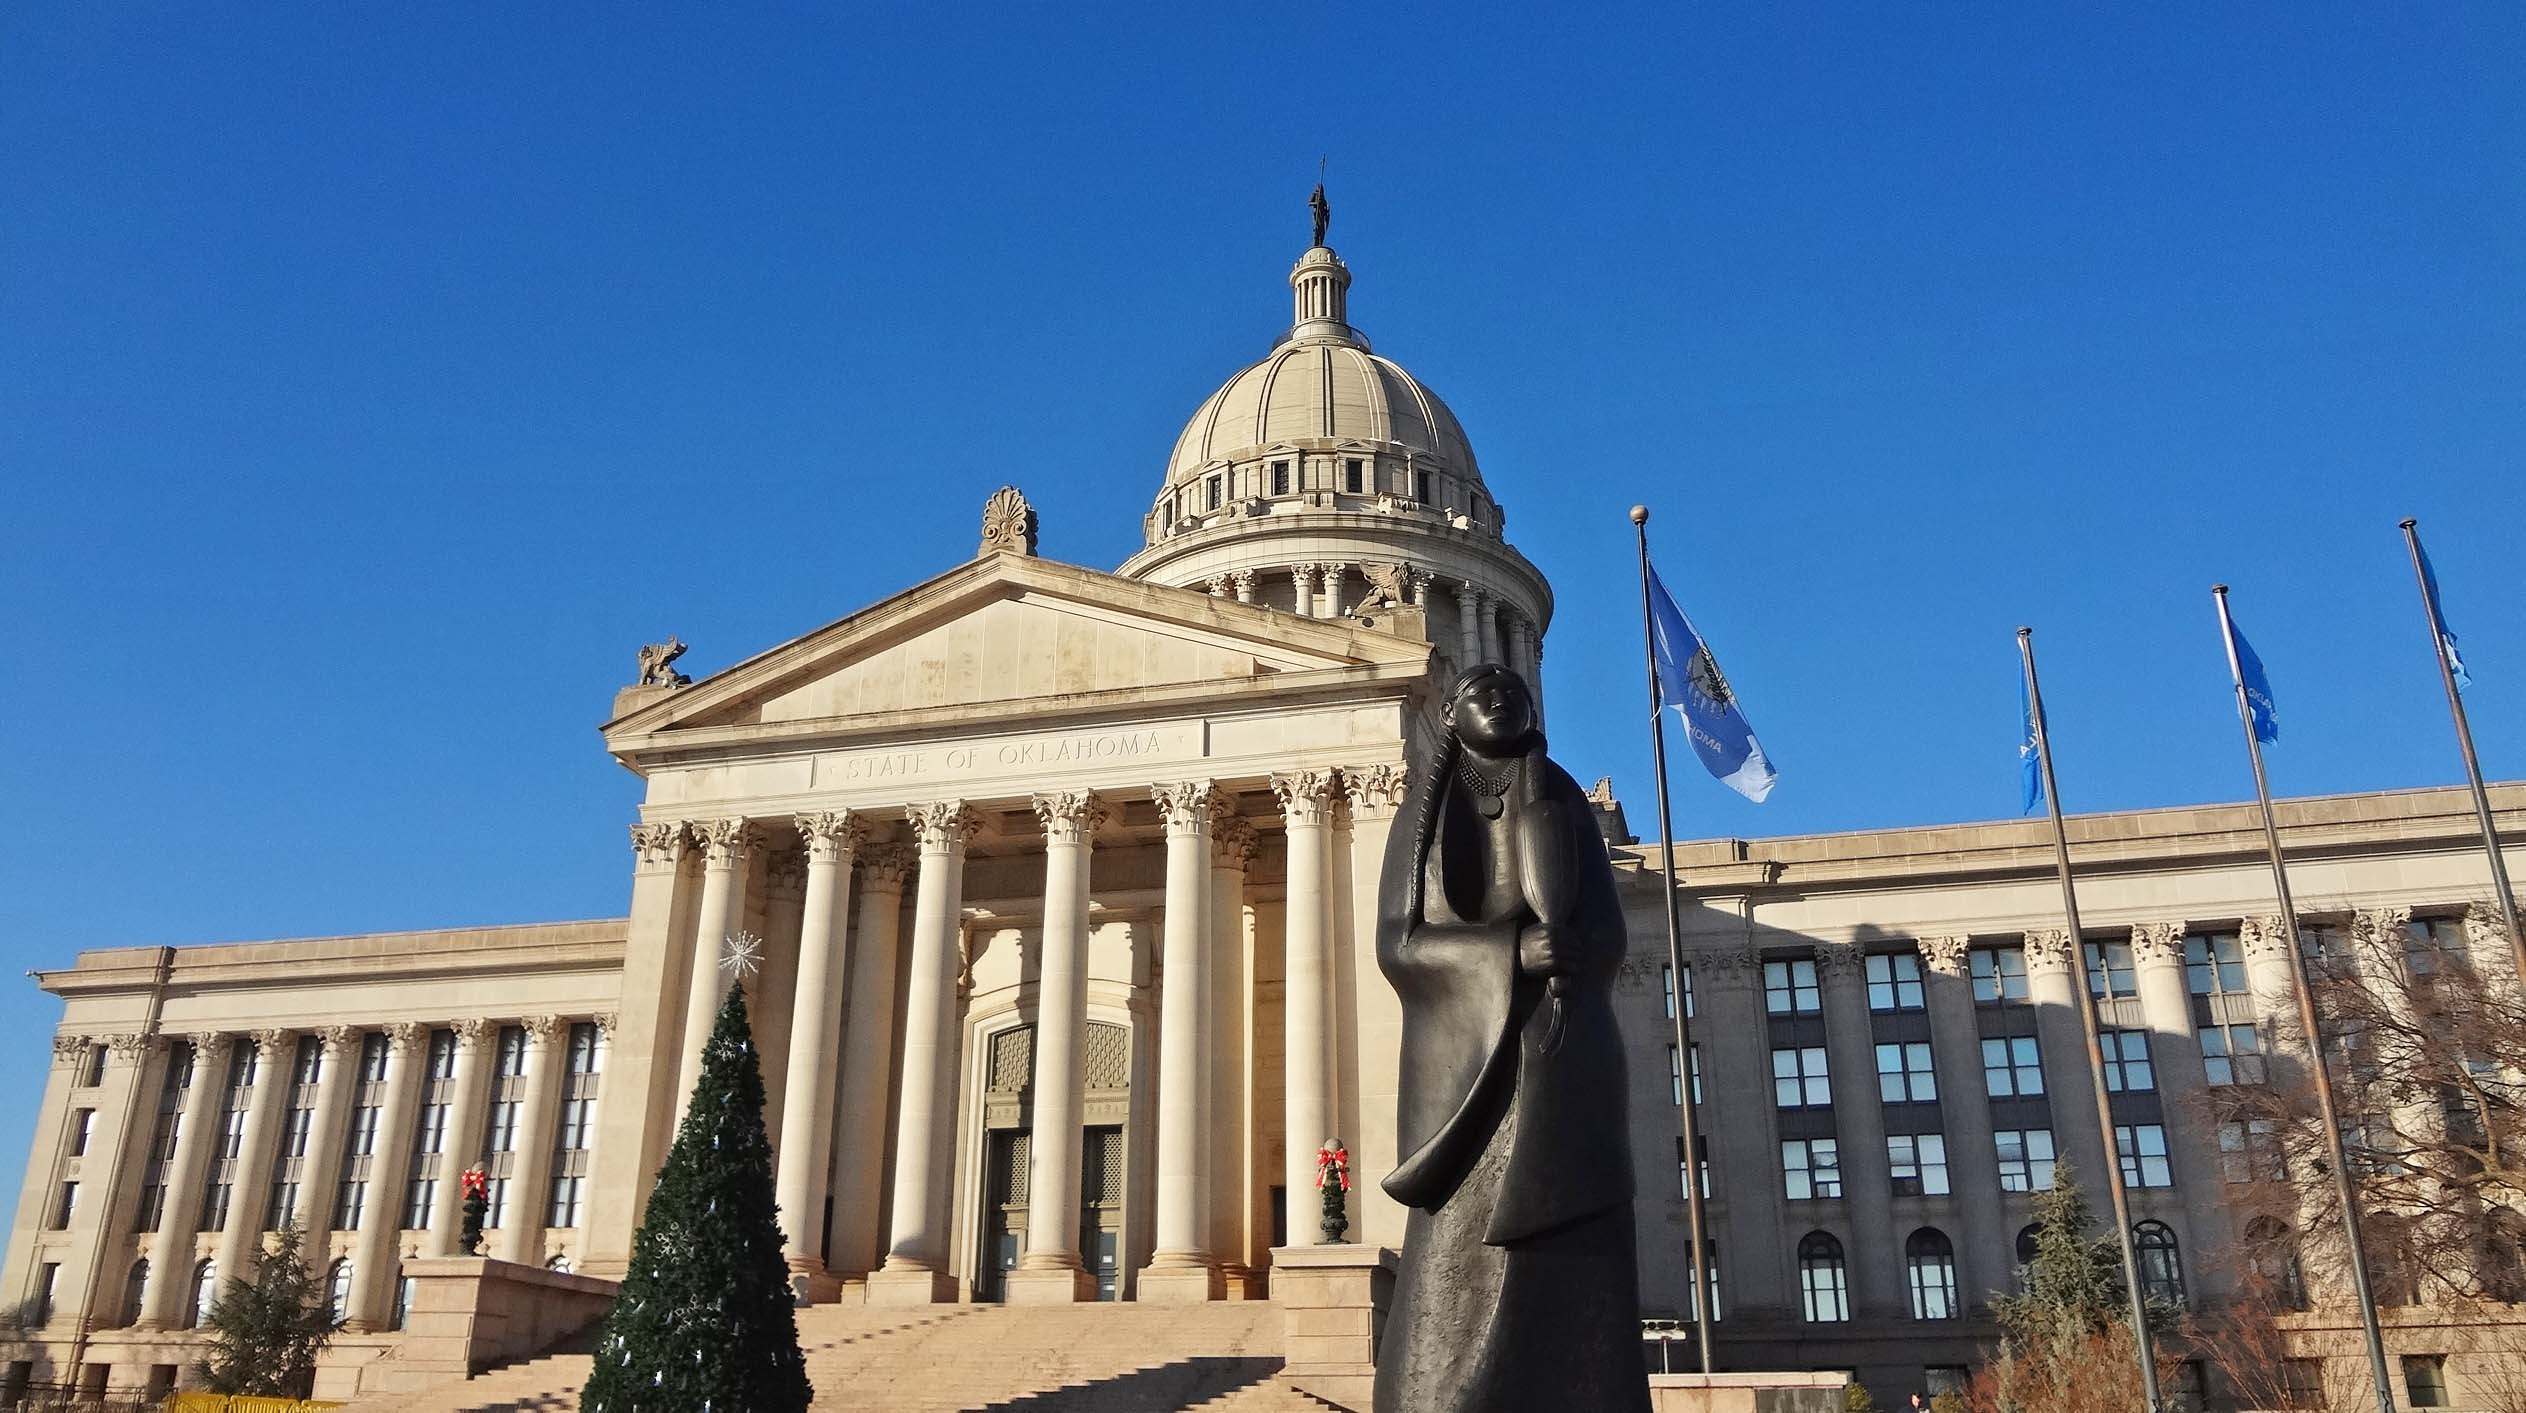 Solo Exhibition Oklahoma State Capitol